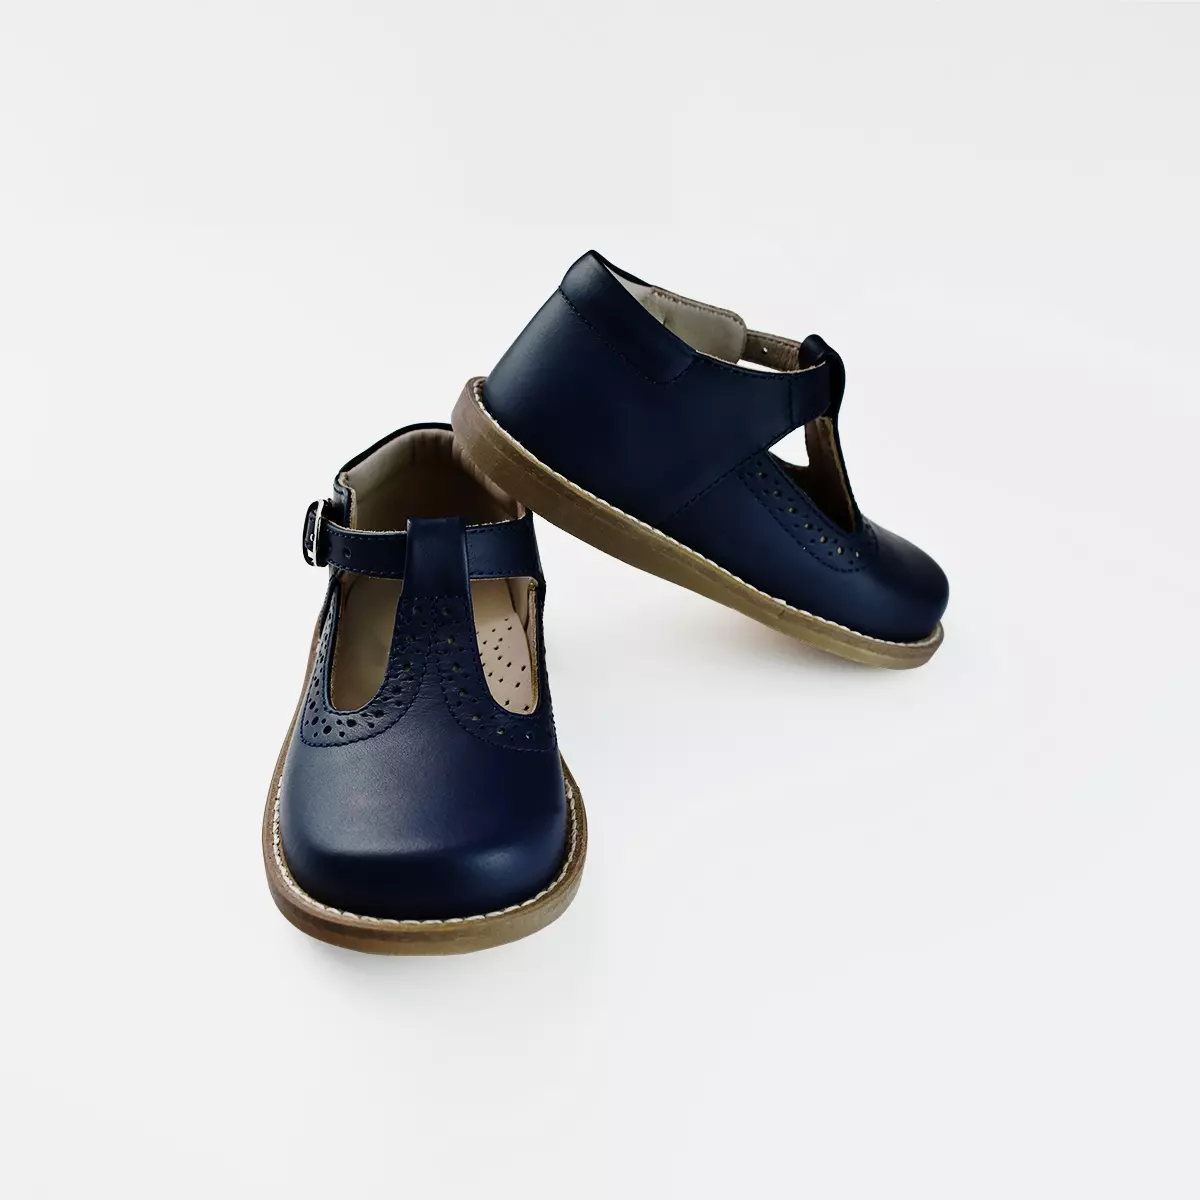 Calzado 100% cuero Zapato Niña Azul 2364 - Hormiguita bebé